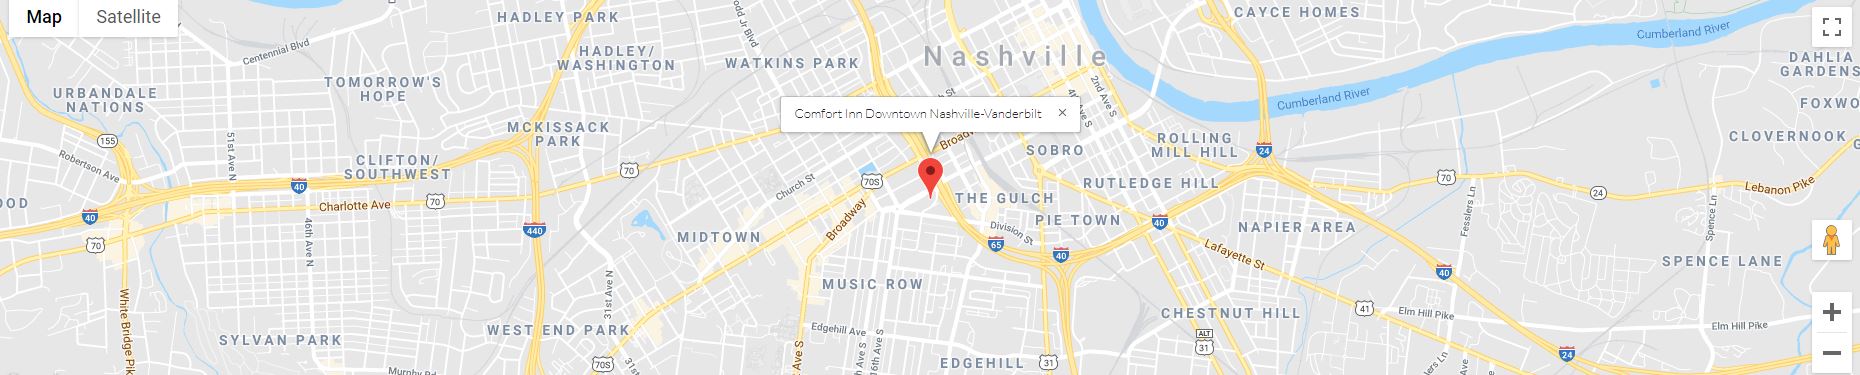 Comfort Inn Downtown Nashville-Vanderbilt Map